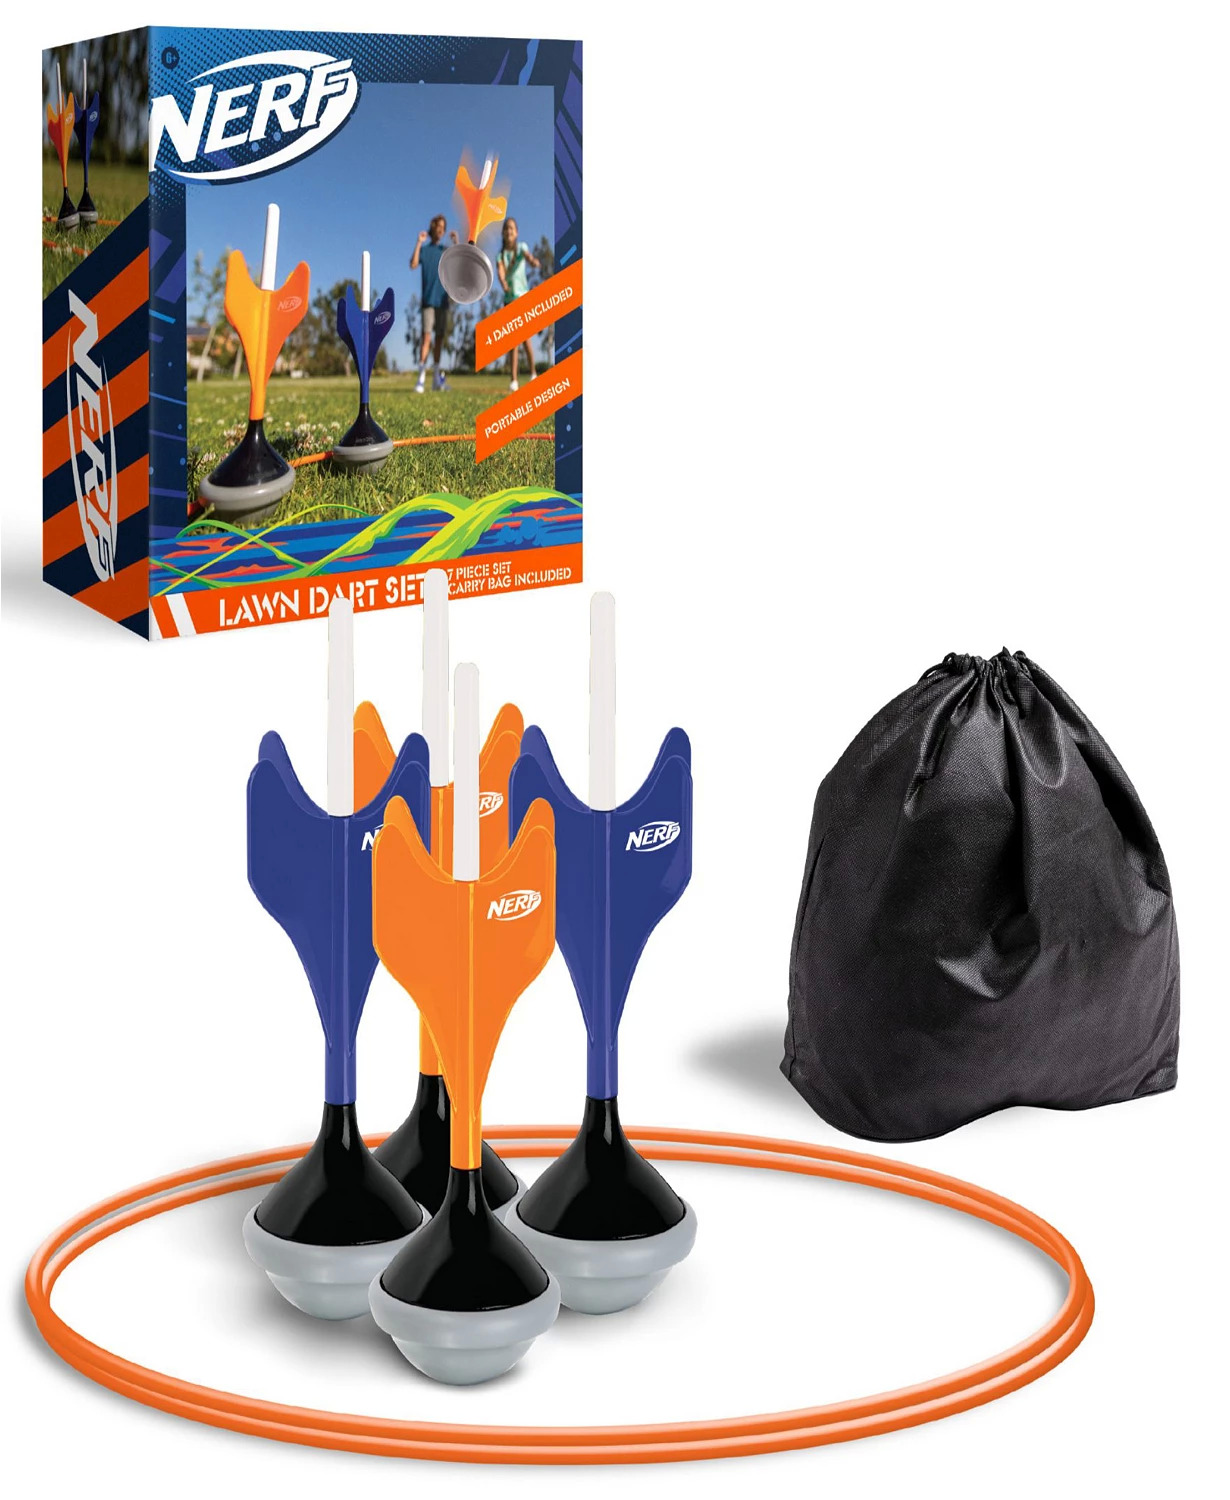 Nerf Lawn Dart Game Set w/ Storage Bag $8 + SD Cashback + Free Store Pickup at Macy's or FS on $25+ $7.99